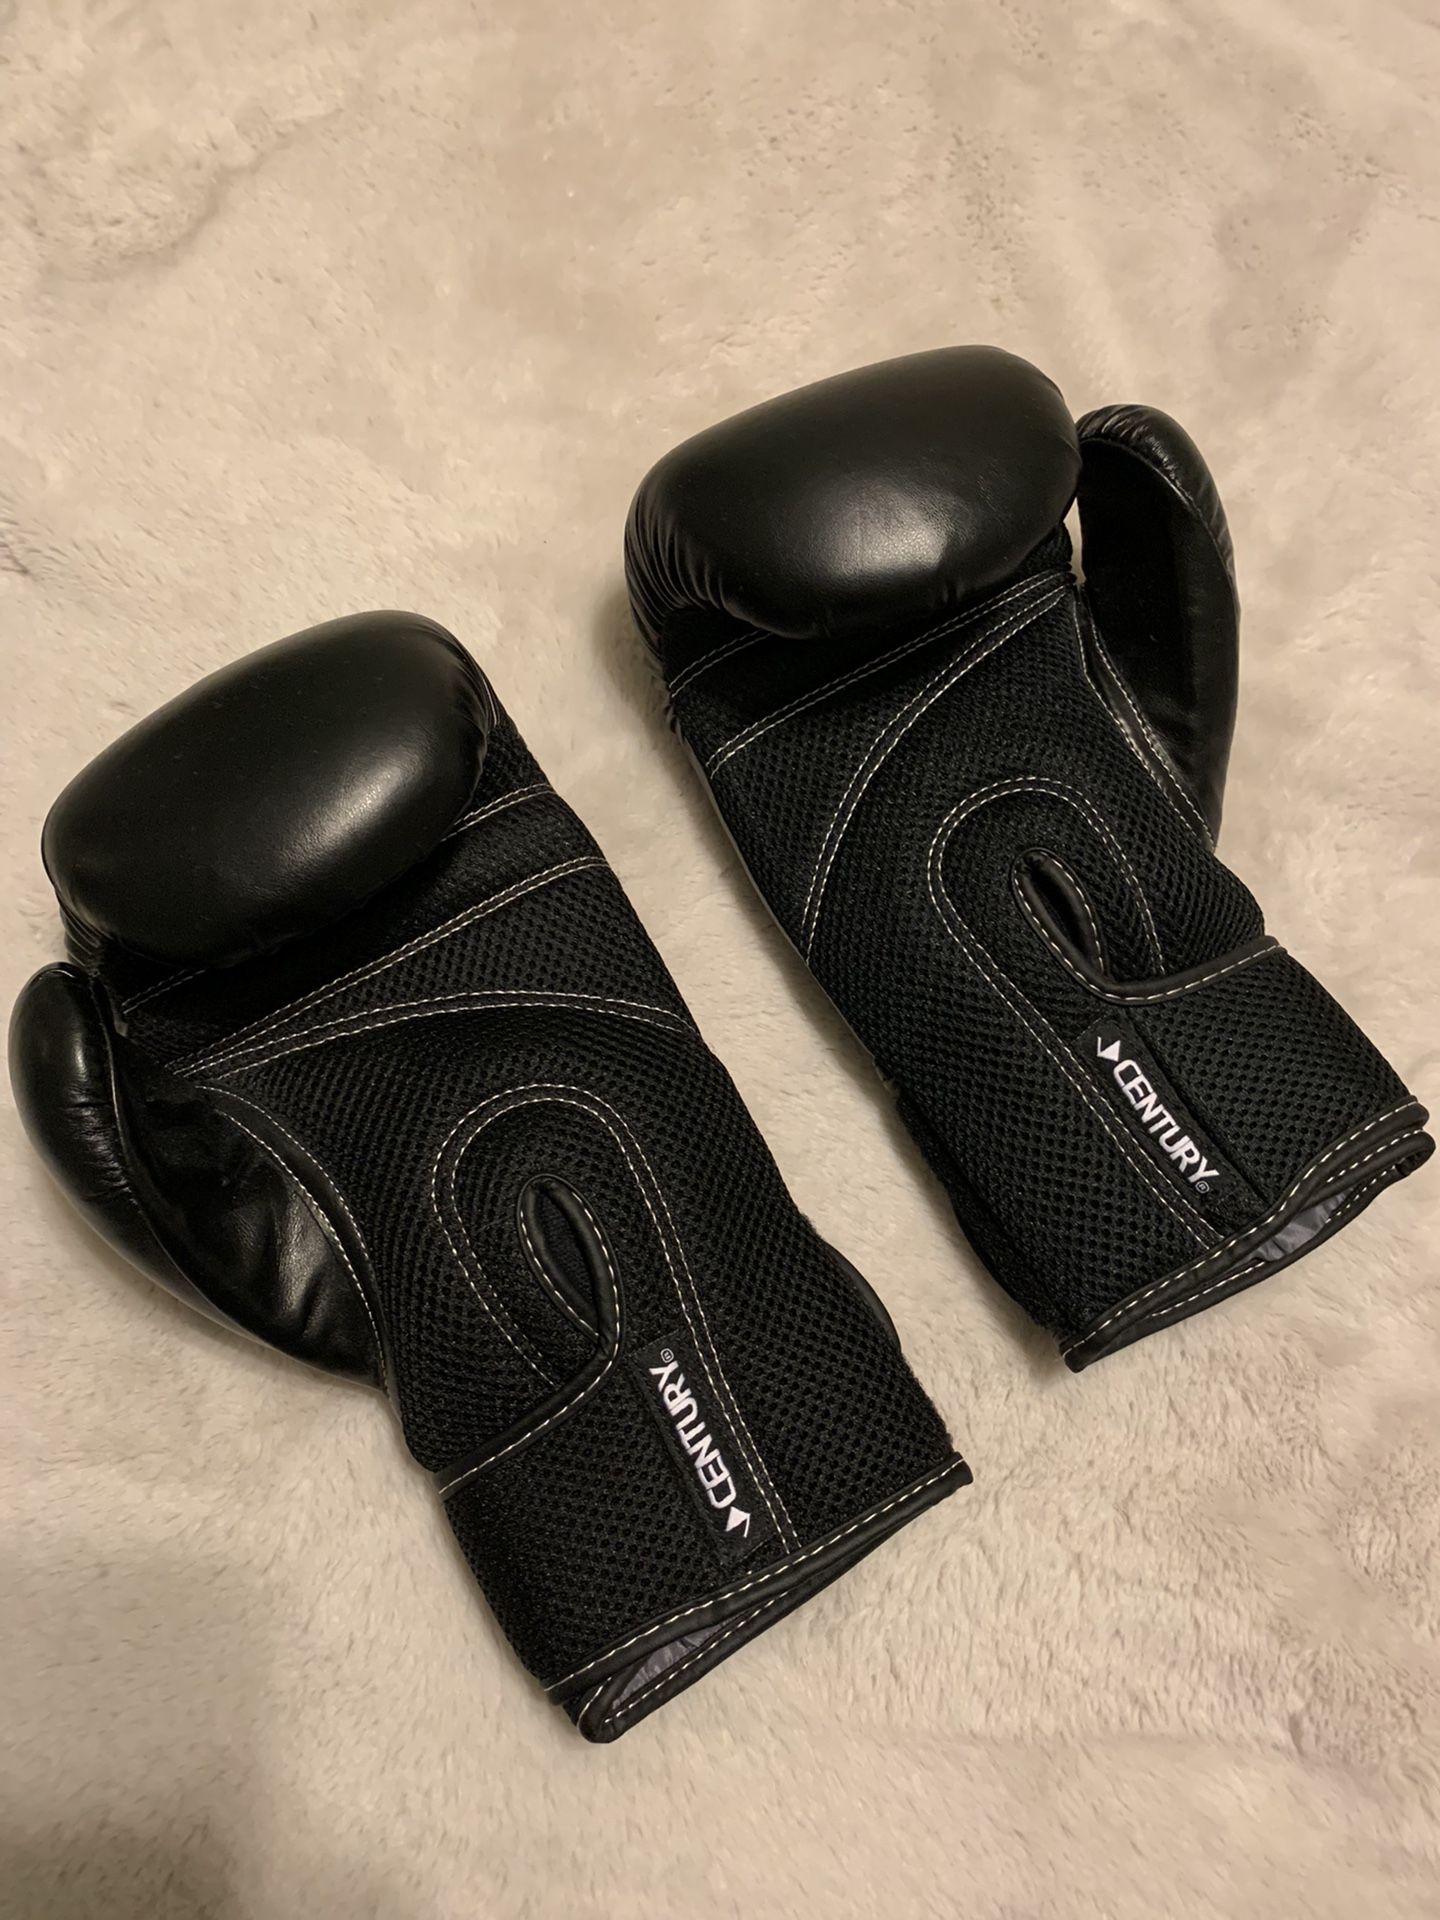 Century Boxing Gloves 